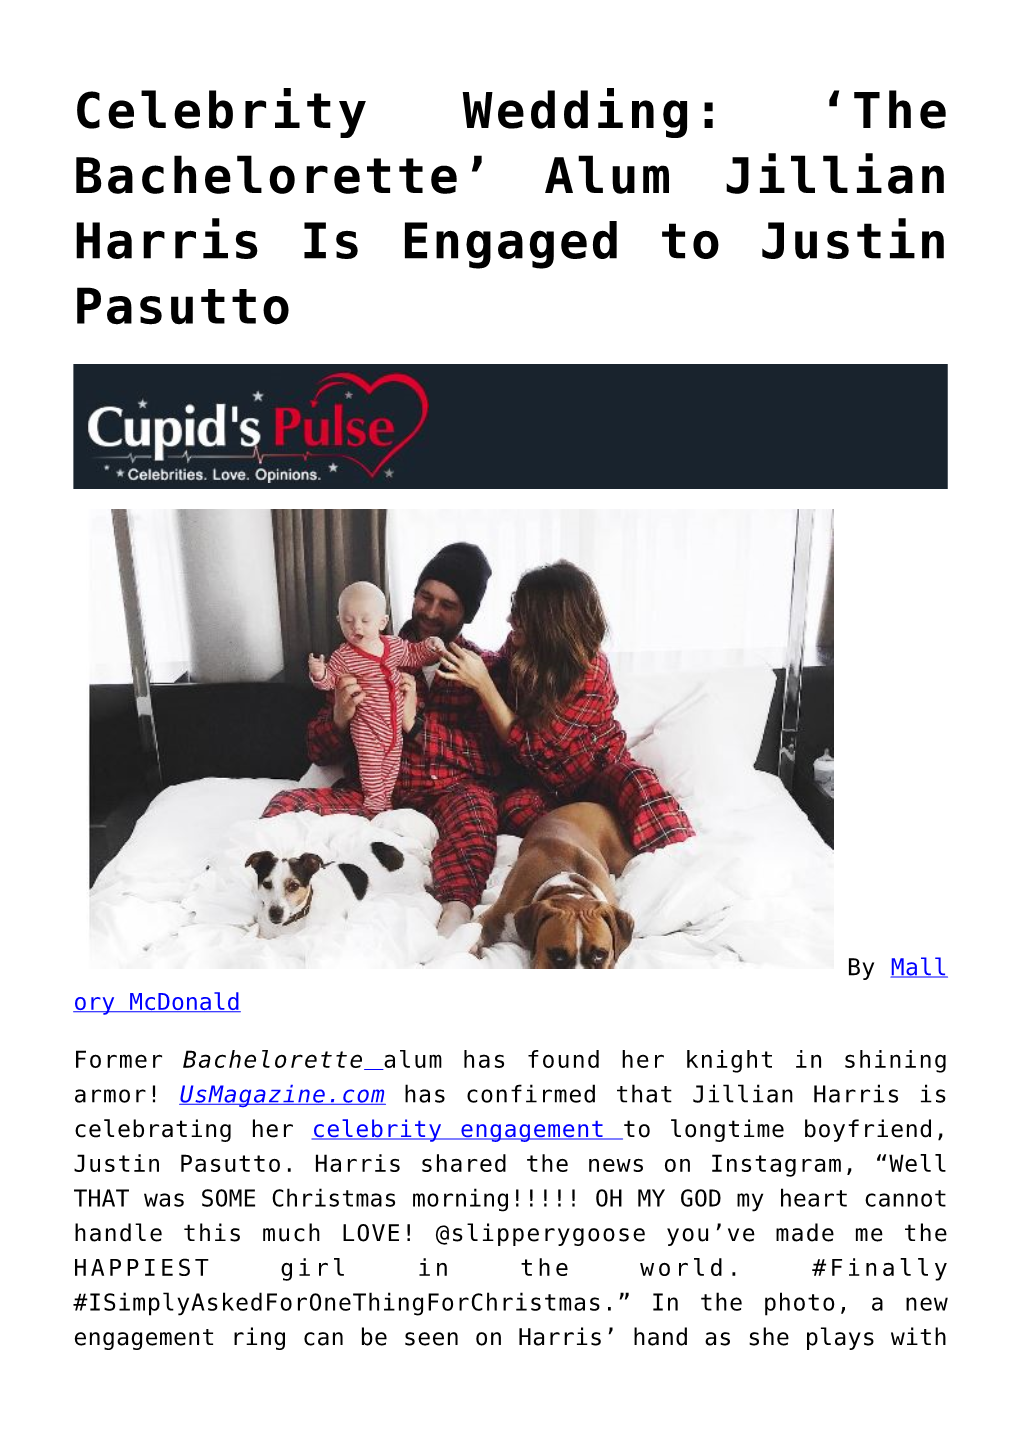 Alum Jillian Harris Is Engaged to Justin Pasutto